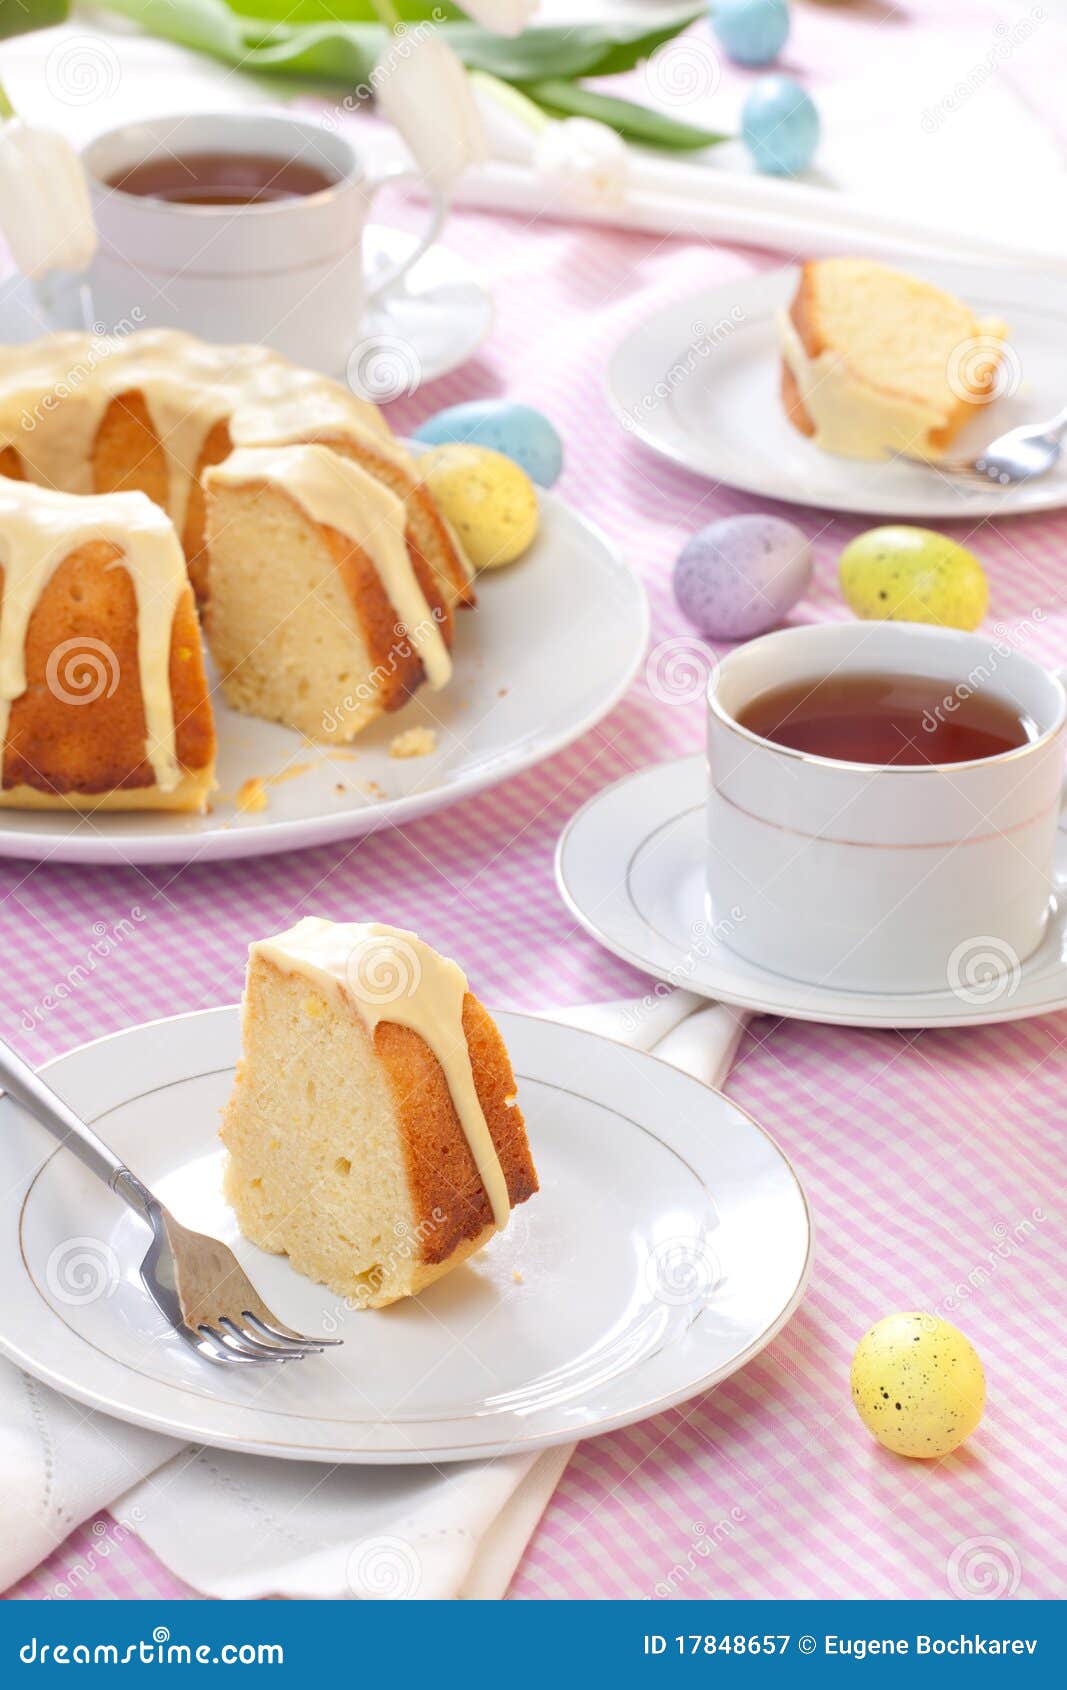 Lemon Easter Cake stock image. Image of gourmet, season - 17848657